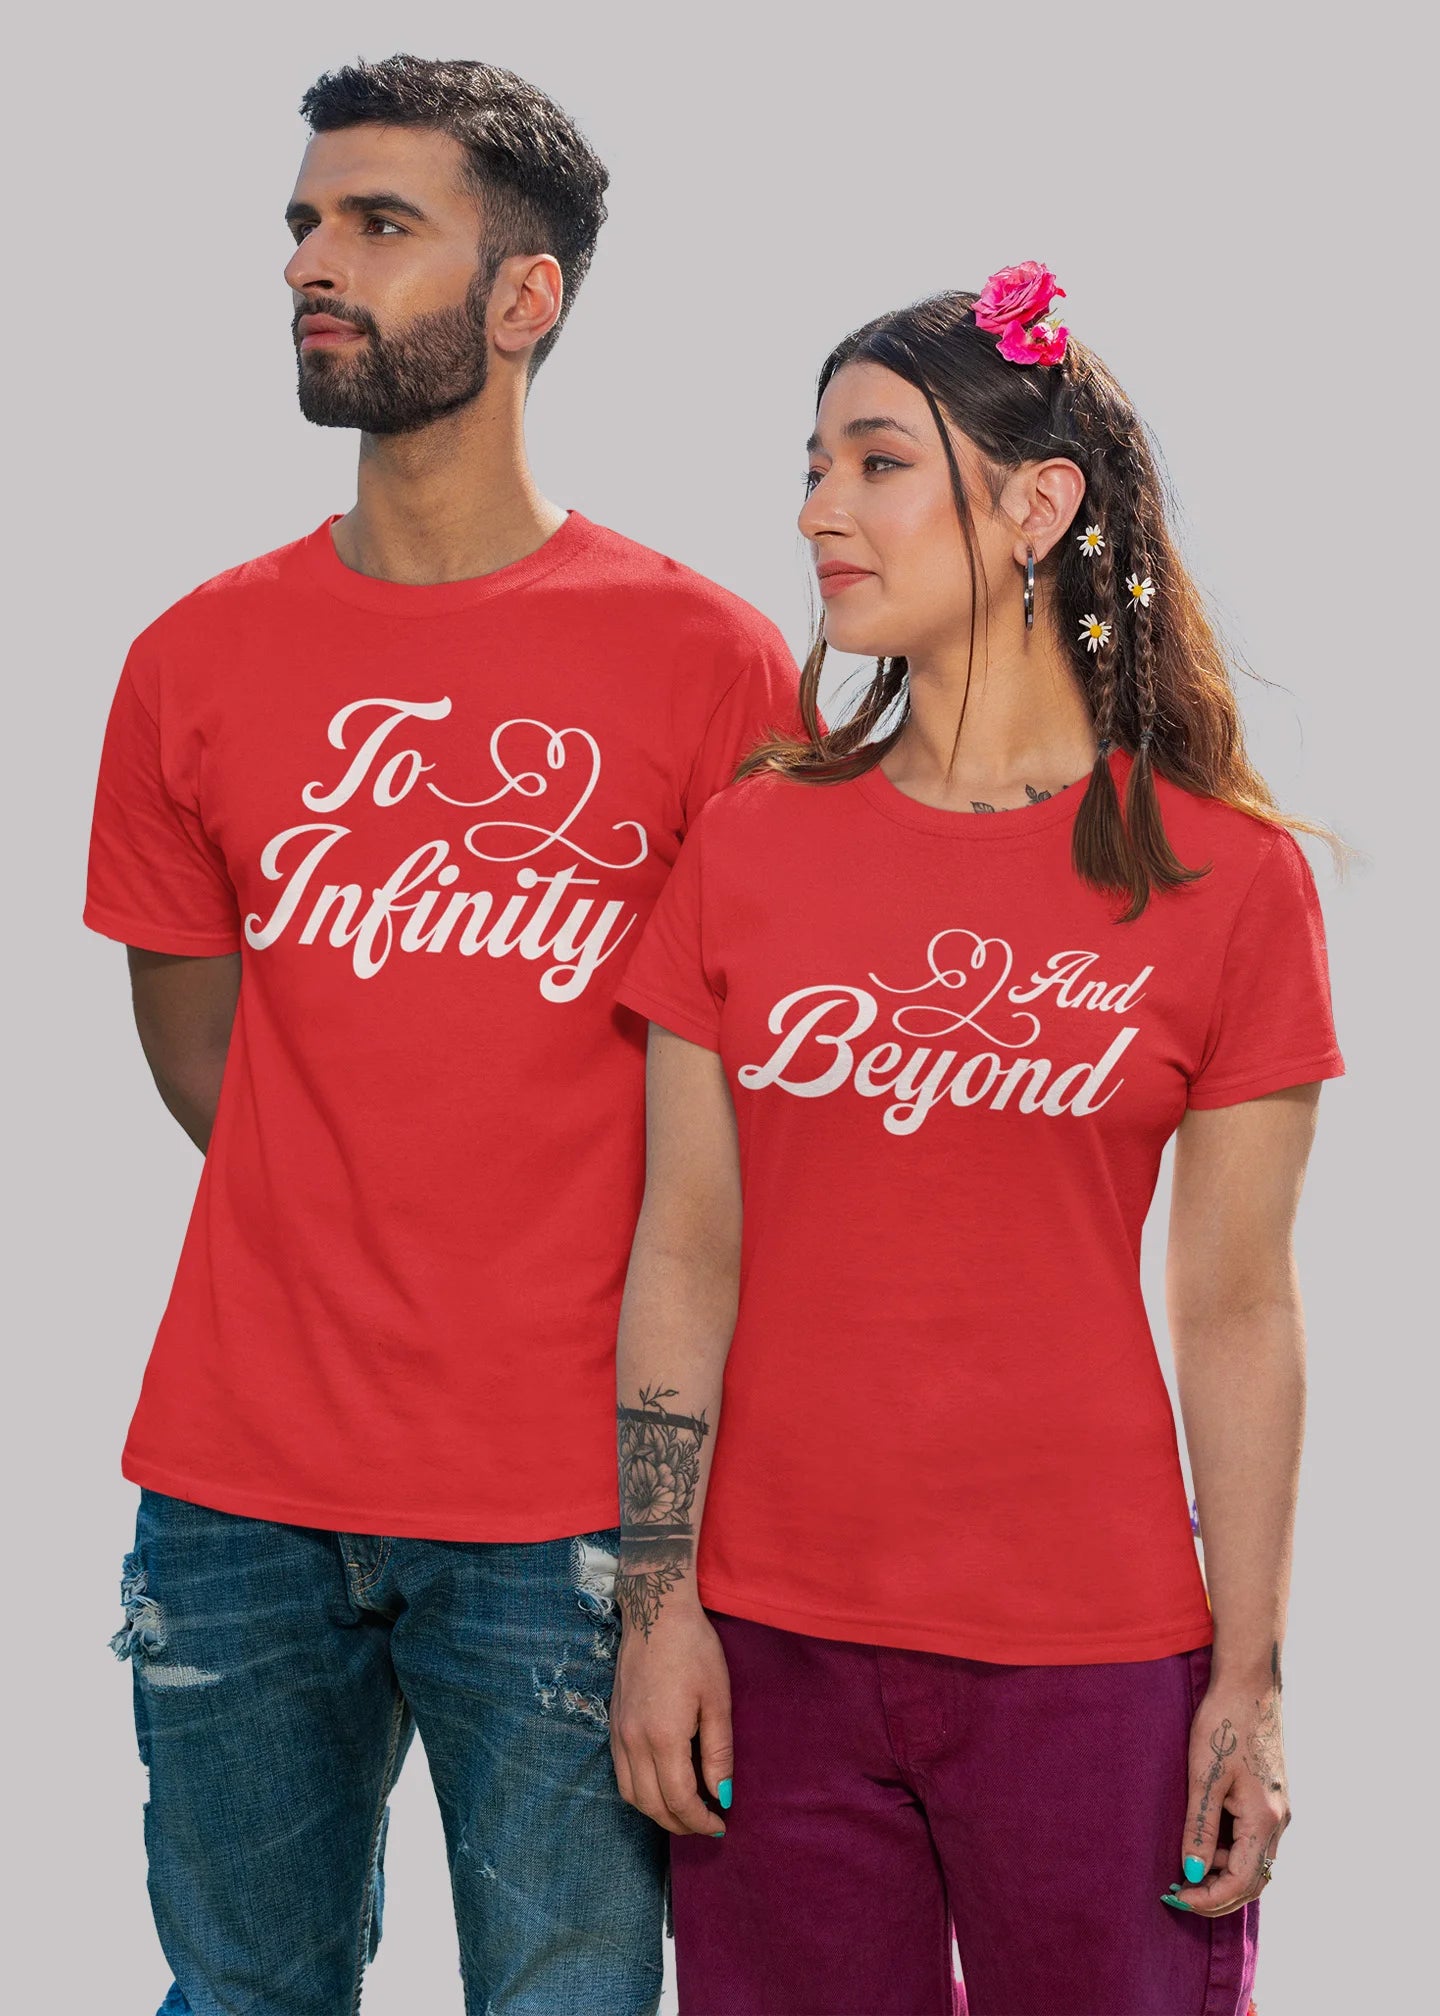 To infinity and beyond Printed Couple T-shirt